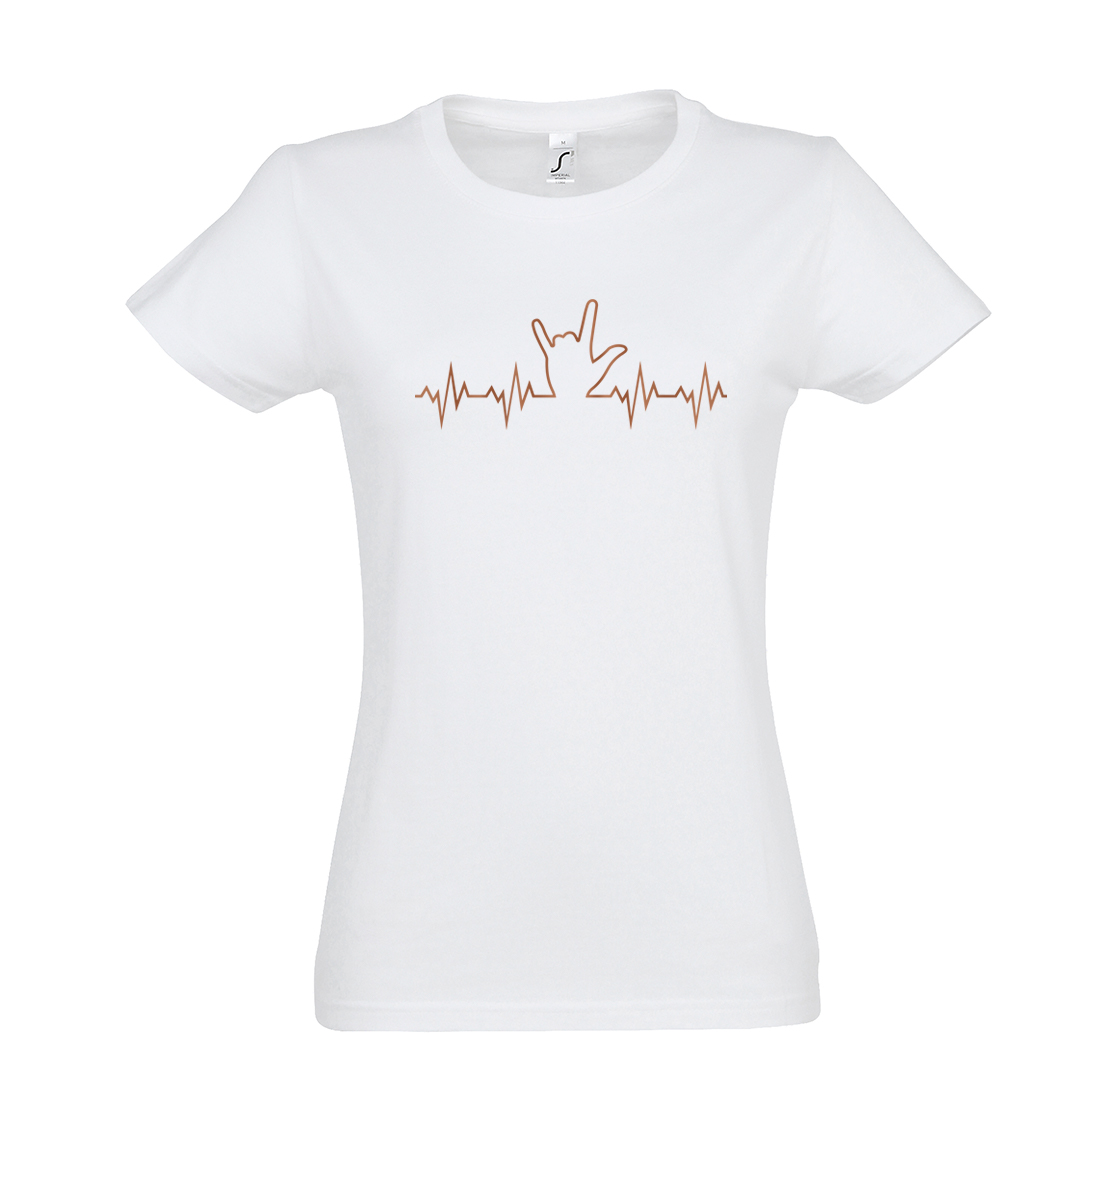 Damen T-Shirt – Herzschlag – laserfreaks17 ILY